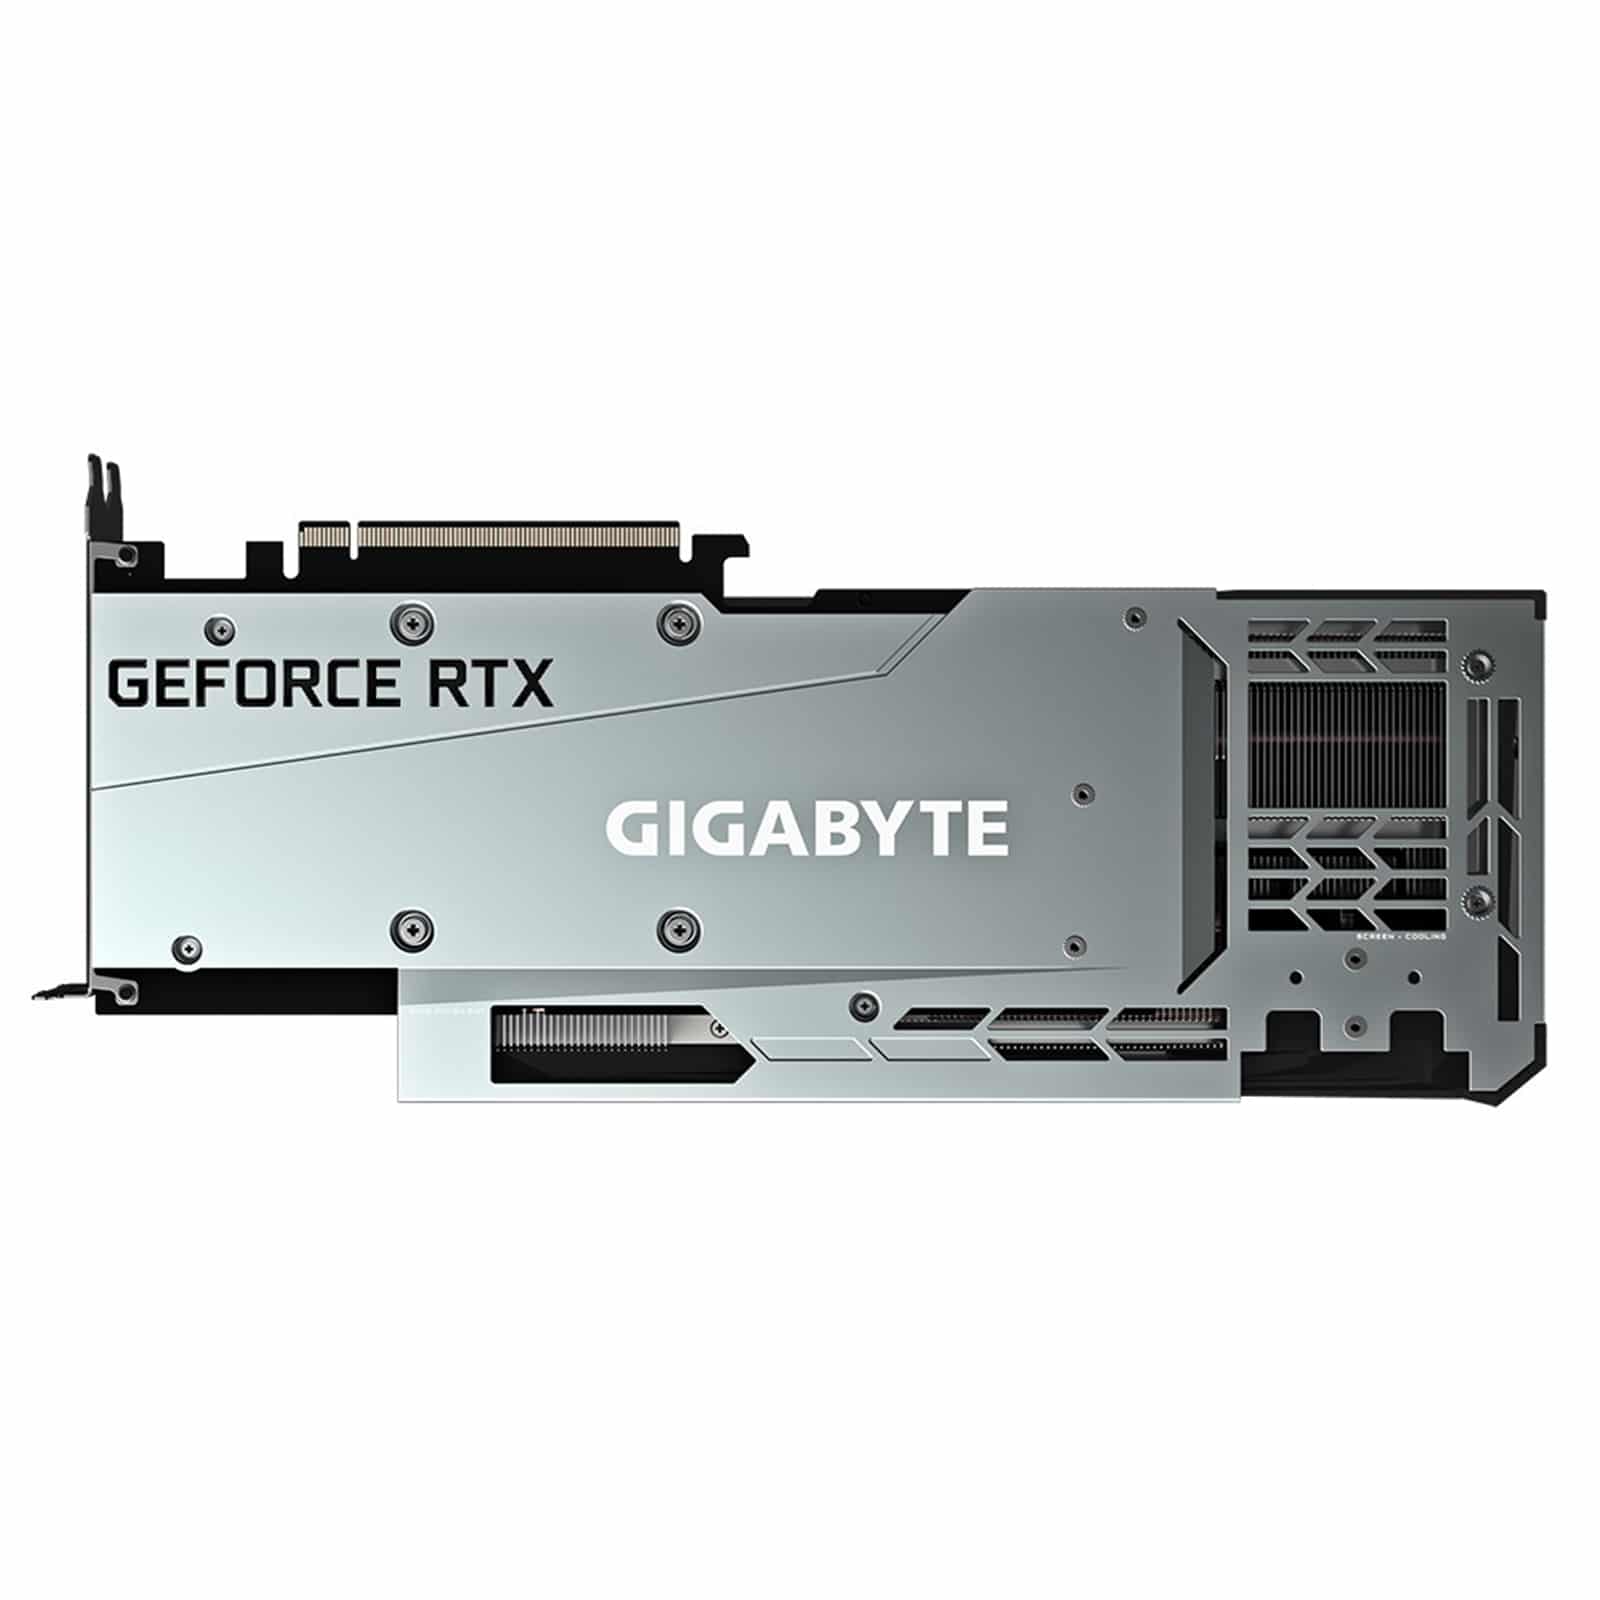 Gigabyte RTX 3080 Ti Gaming OC Backplate View